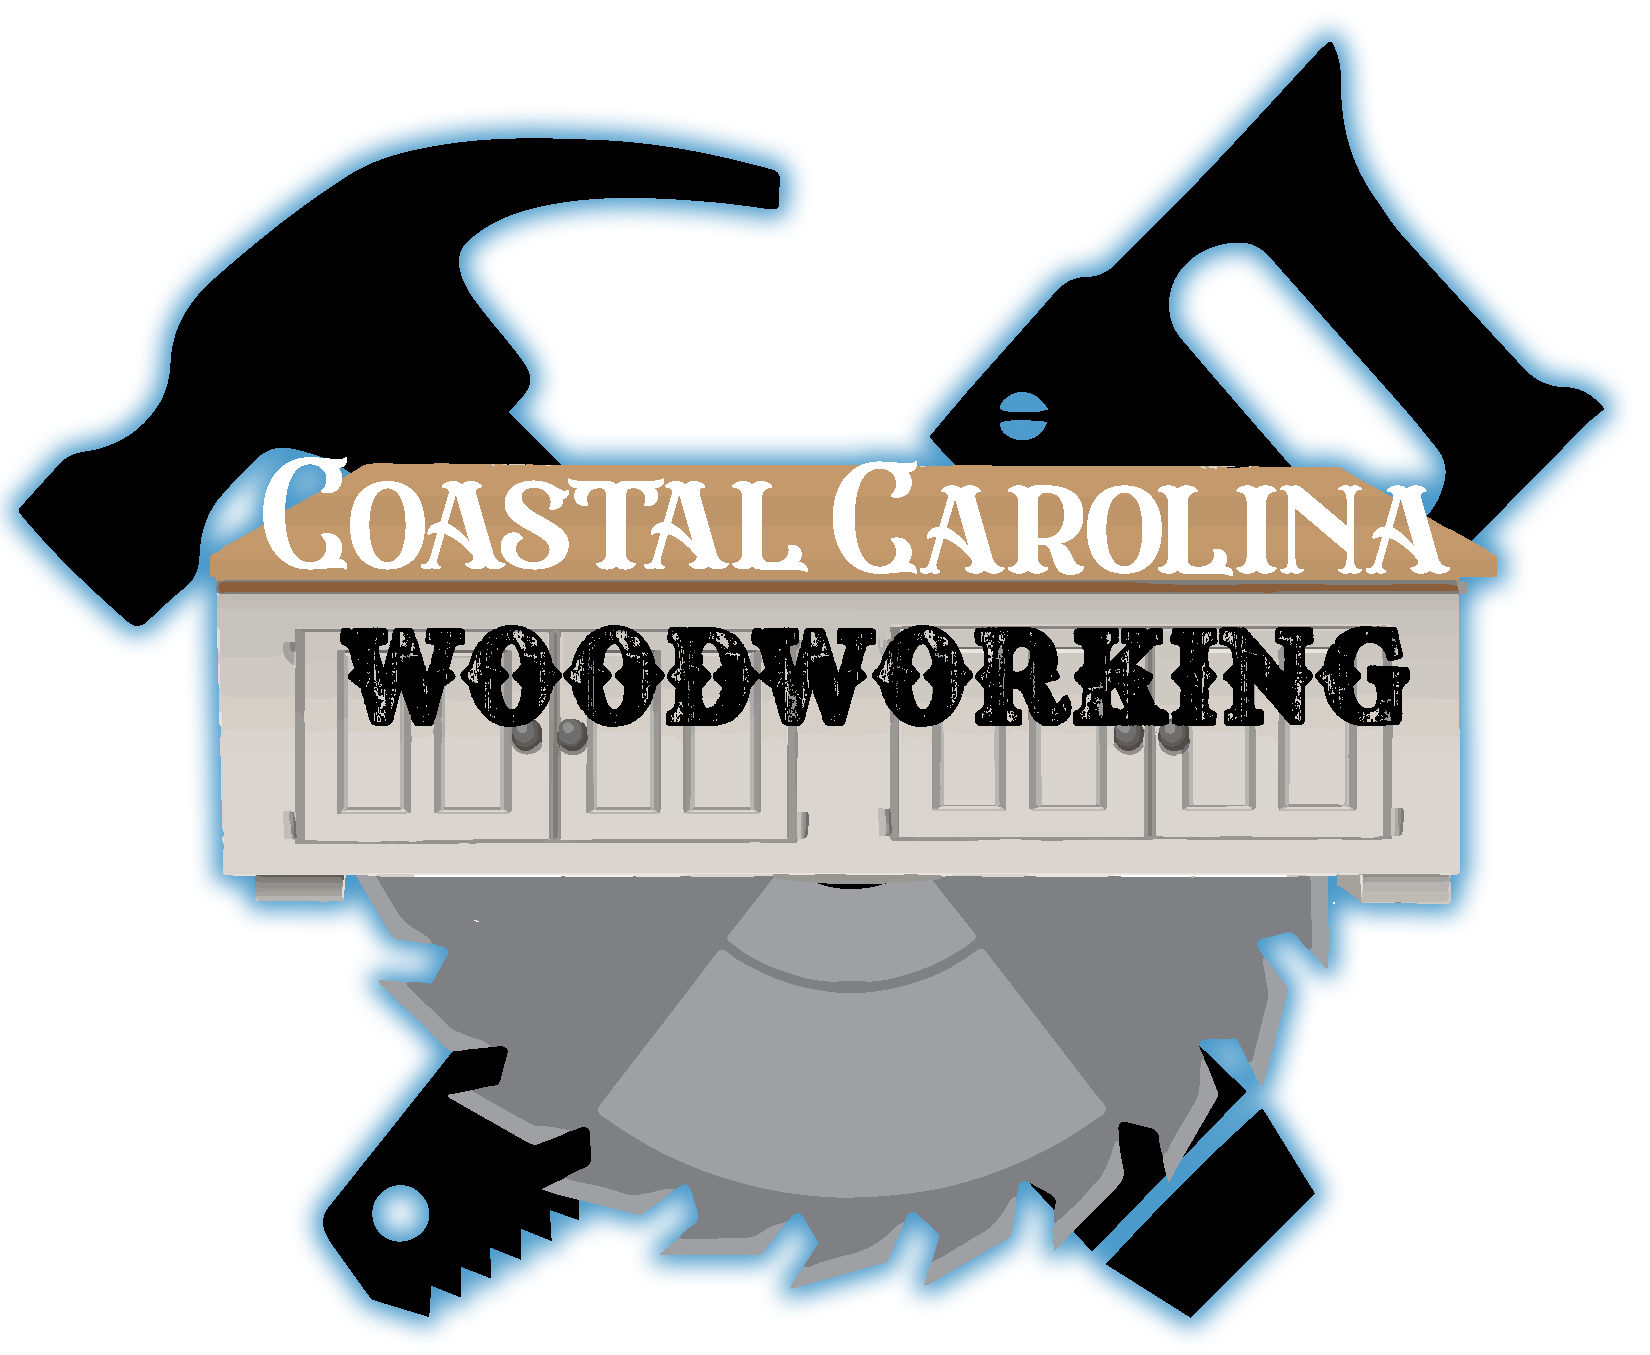 Coastal Carolina Woodworking